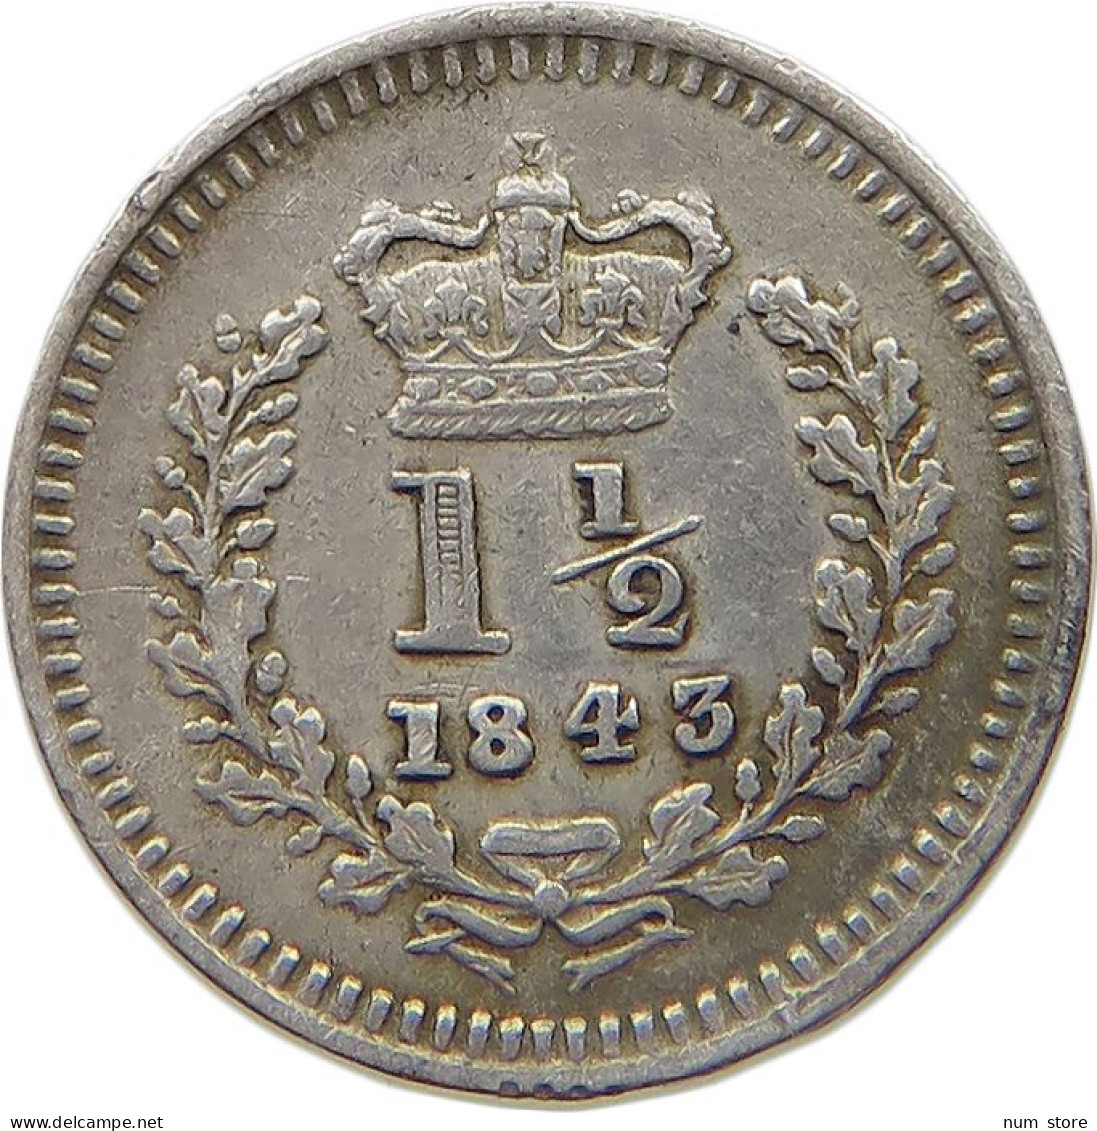 GREAT BRITAIN 1 1/2 PENCE 1843 VICTORIA 1837-1901 #MA 022957 - E. 1 1/2 - 2 Pence